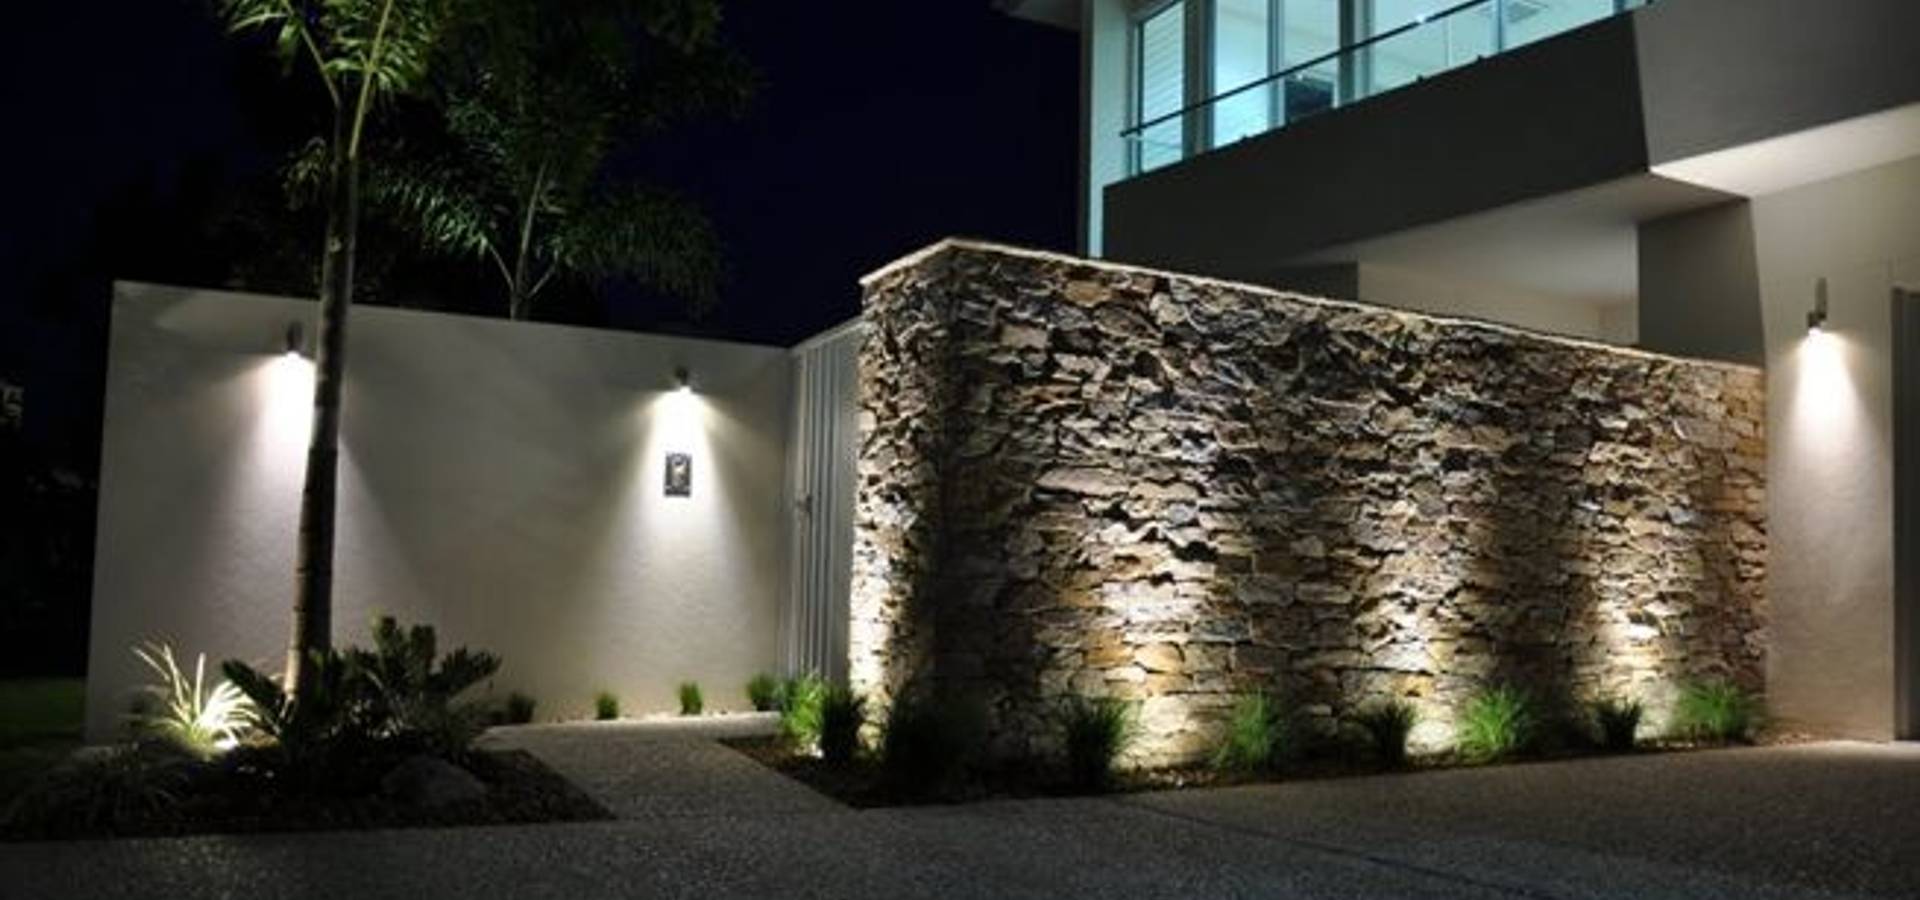 Iluminacion Exterior Jardines Avtor Cenflor Iluminacion Lamparas Valencia Leds Homify